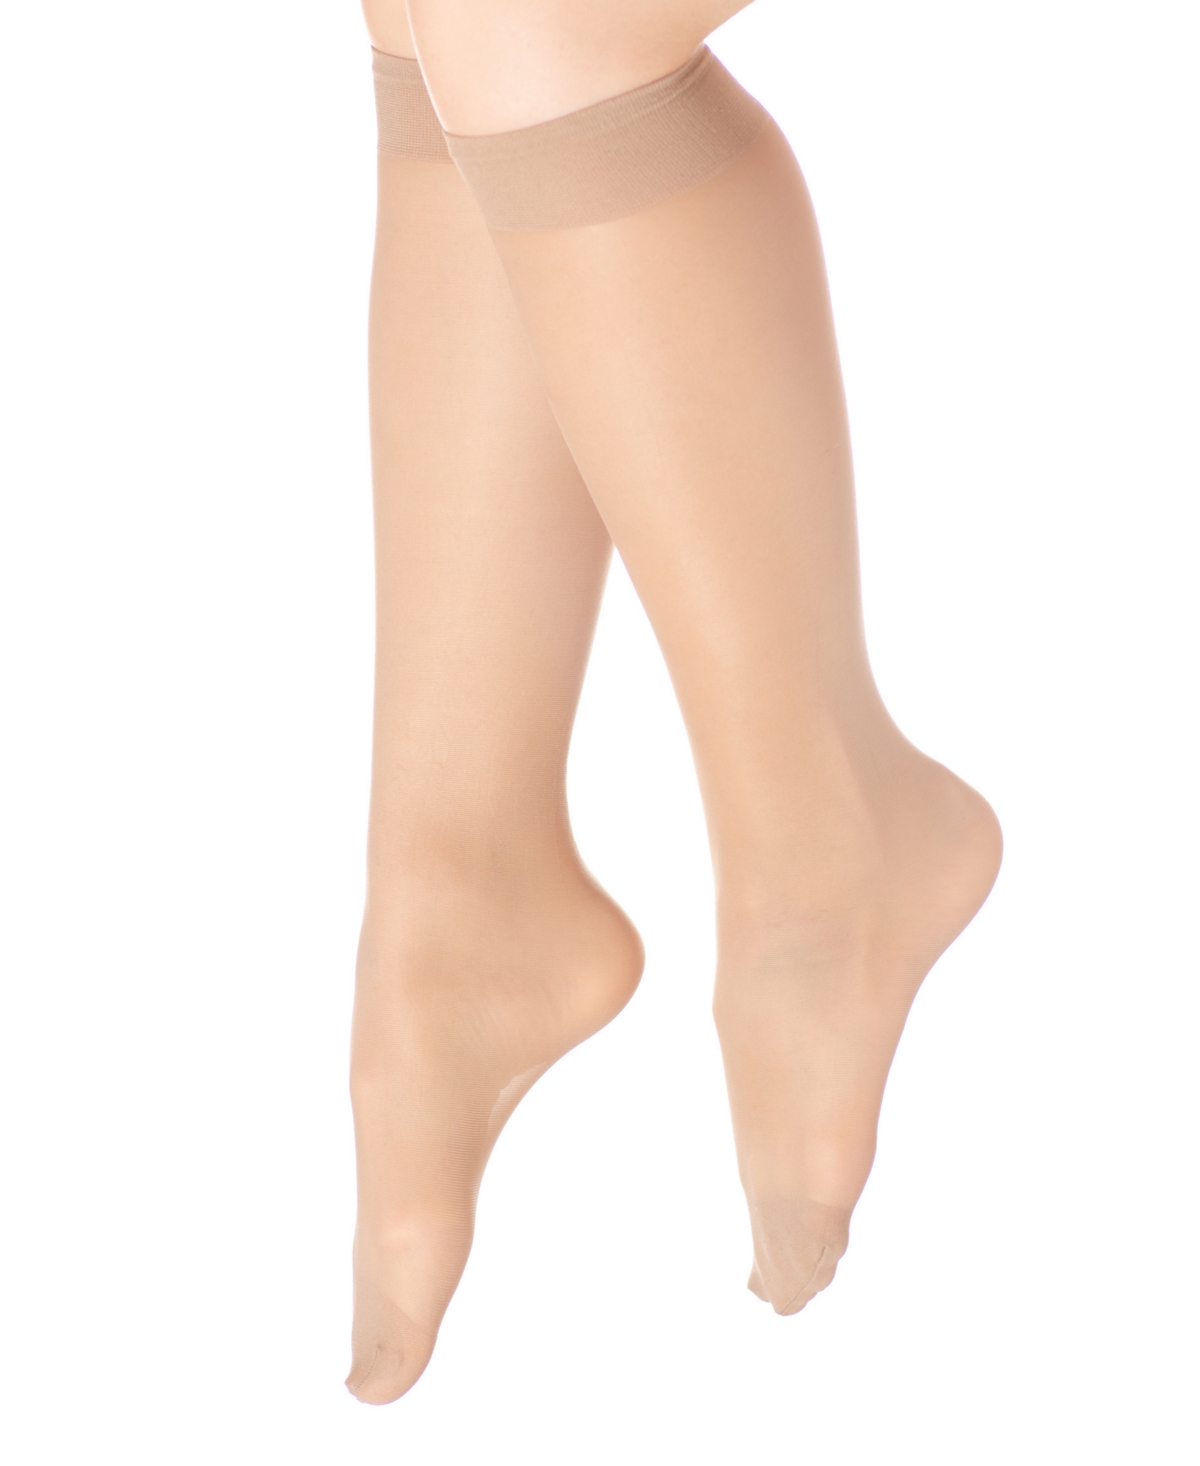 Women's European Made Matte Silky Sheer 20 Denier 2 Pairs of Knee-highs - Natural